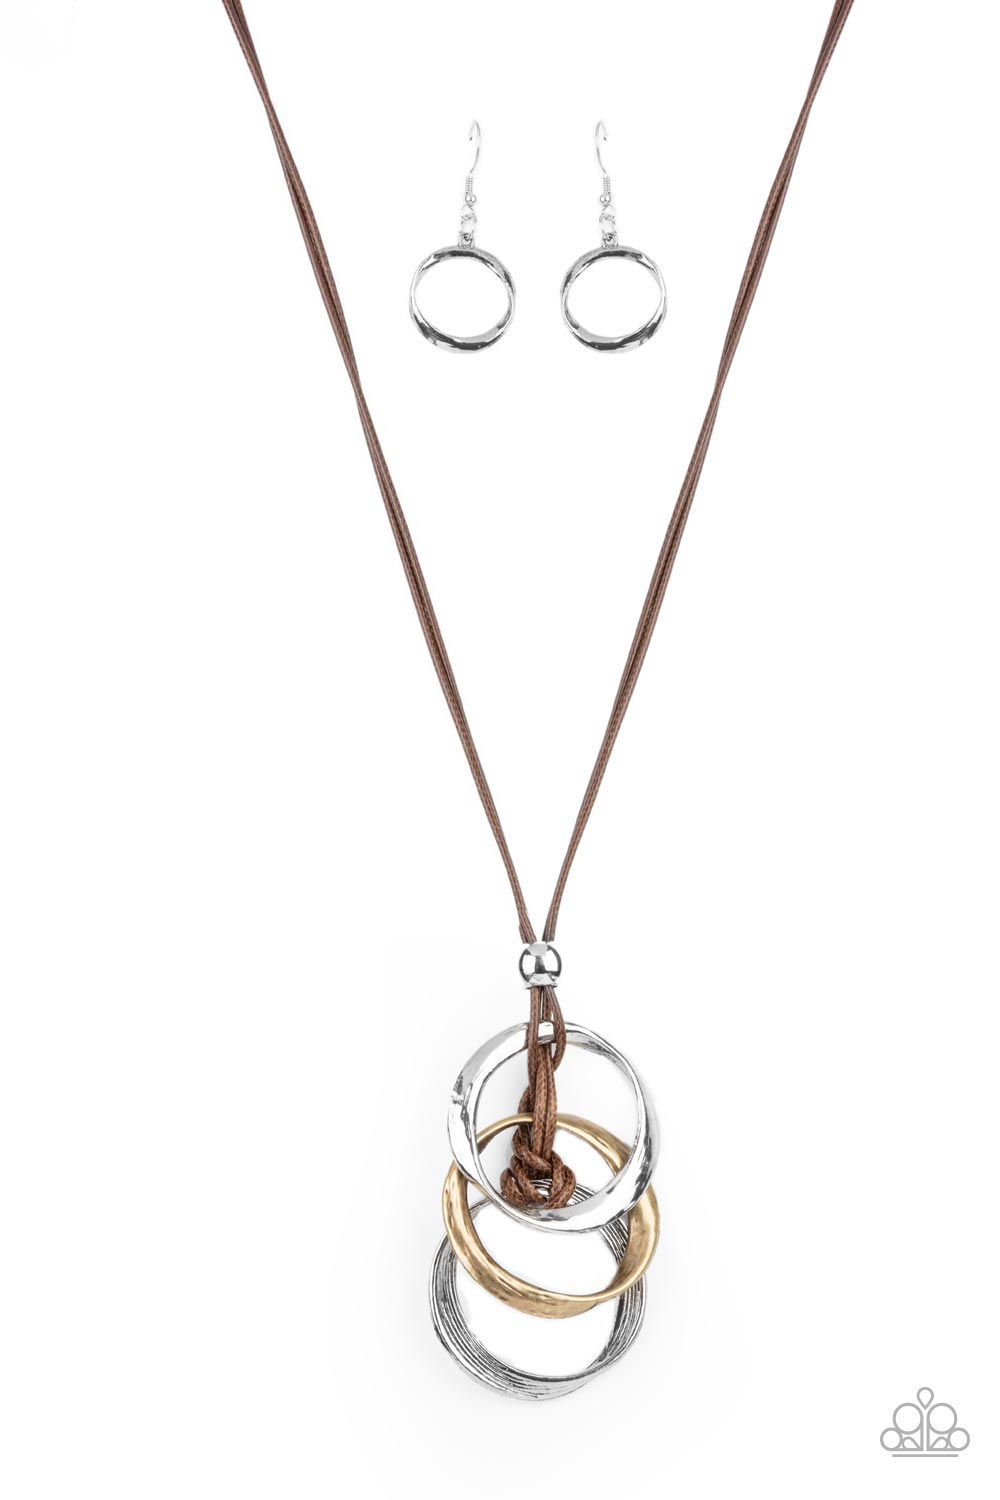 Harmonious Hardware - Brown Necklace freeshipping - JewLz4u Gemstone Gallery